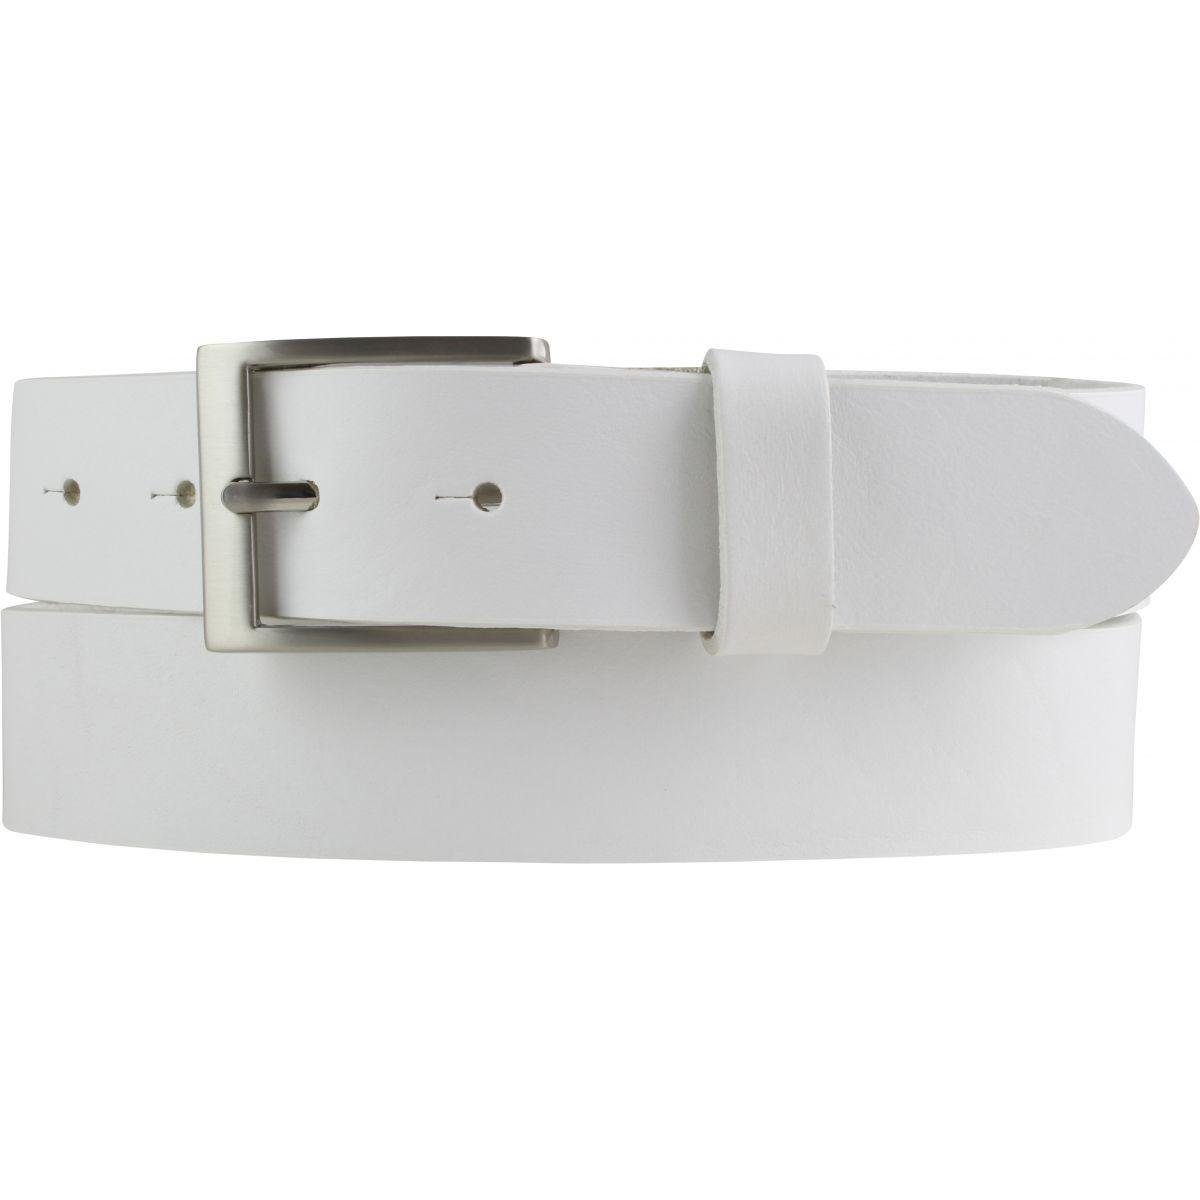 BELTINGER Ledergürtel Gürtel aus Vollrindleder 3,5 cm - Jeans-Gürtel für Damen Herren 35mm - Weiß, Silber